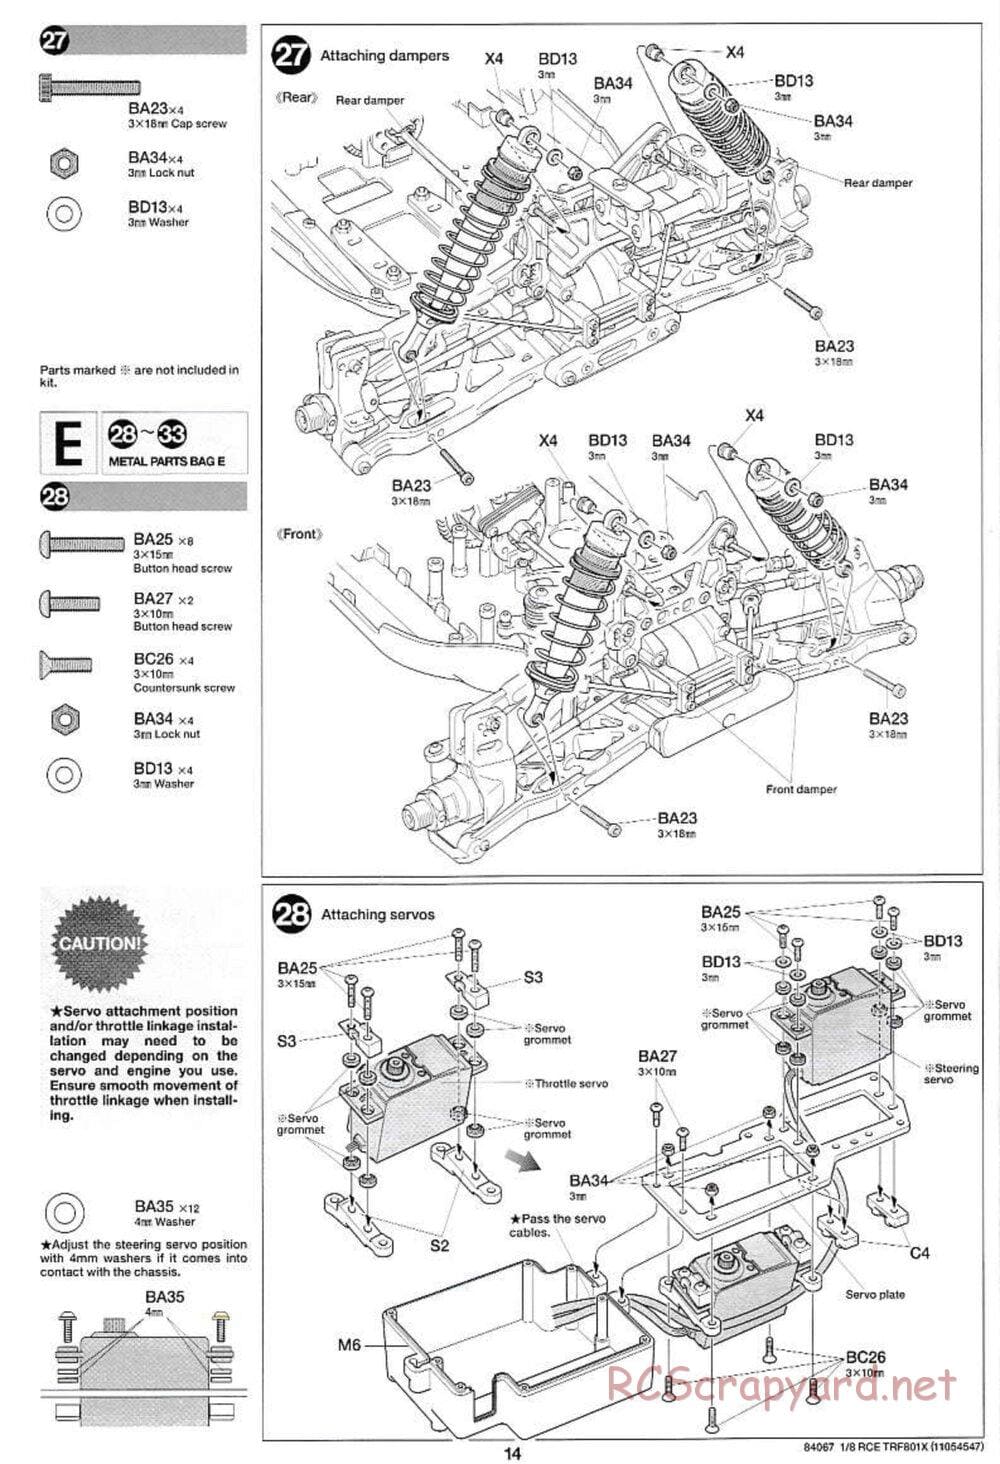 Tamiya - TRF801X Chassis - Manual - Page 14